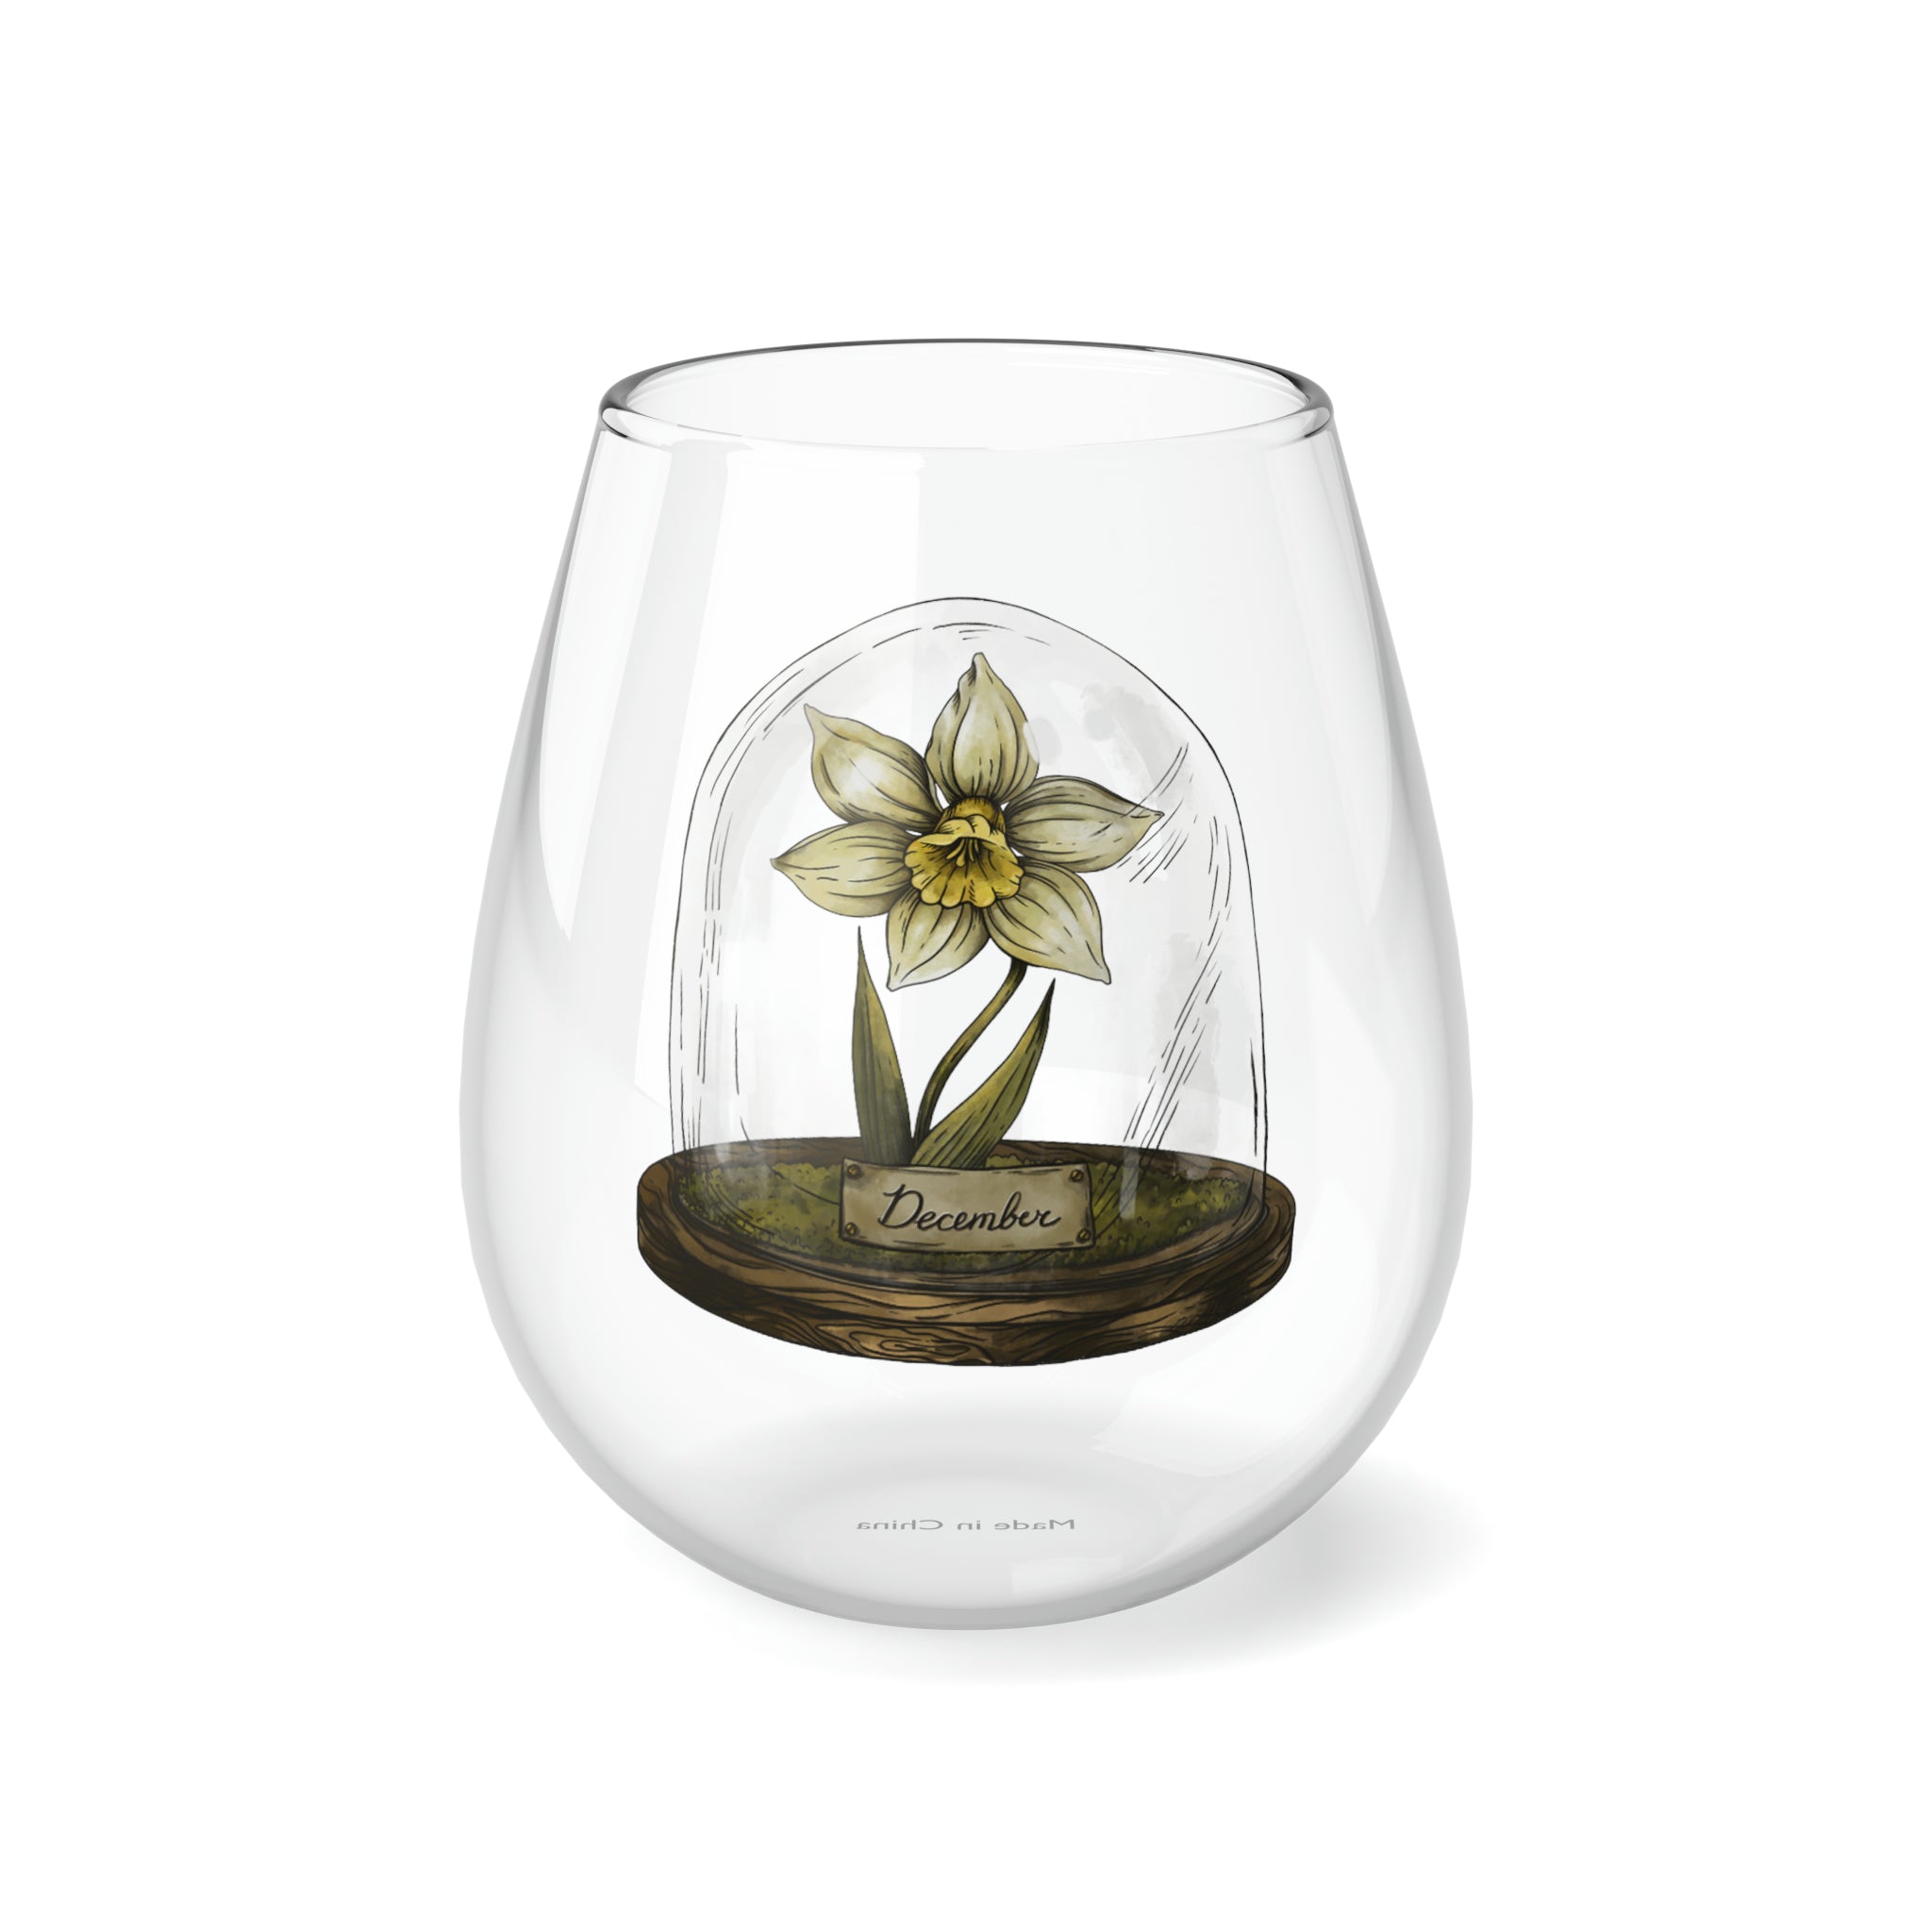 December Birth Flower - Stemless Wine Glass, 11.75oz